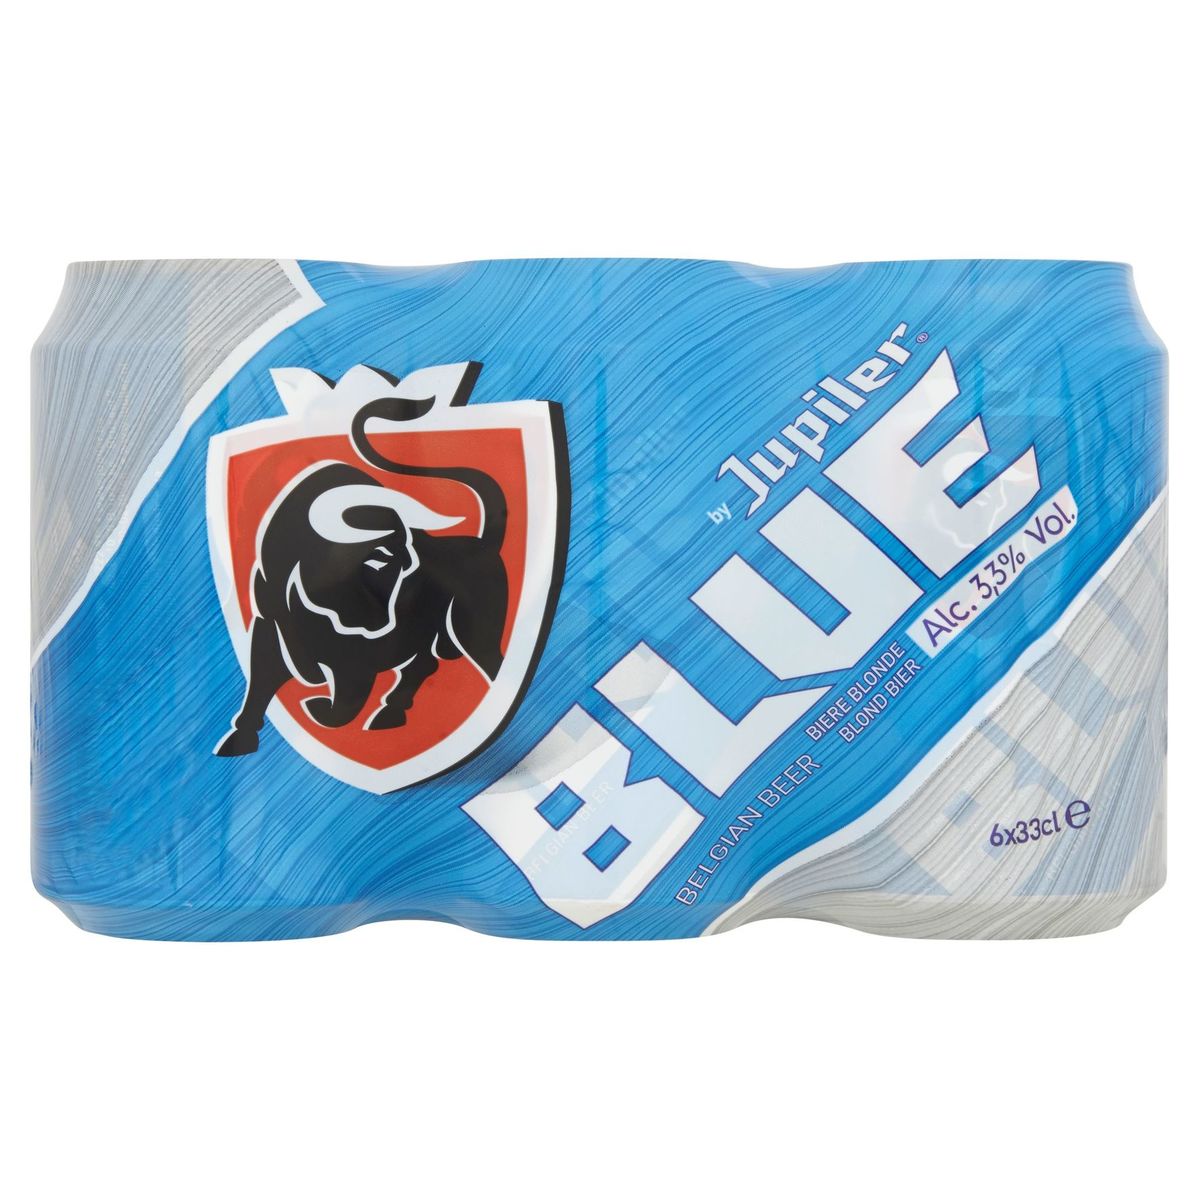 Jupiler Blue Blond Bier Blikken 6 x 33 cl